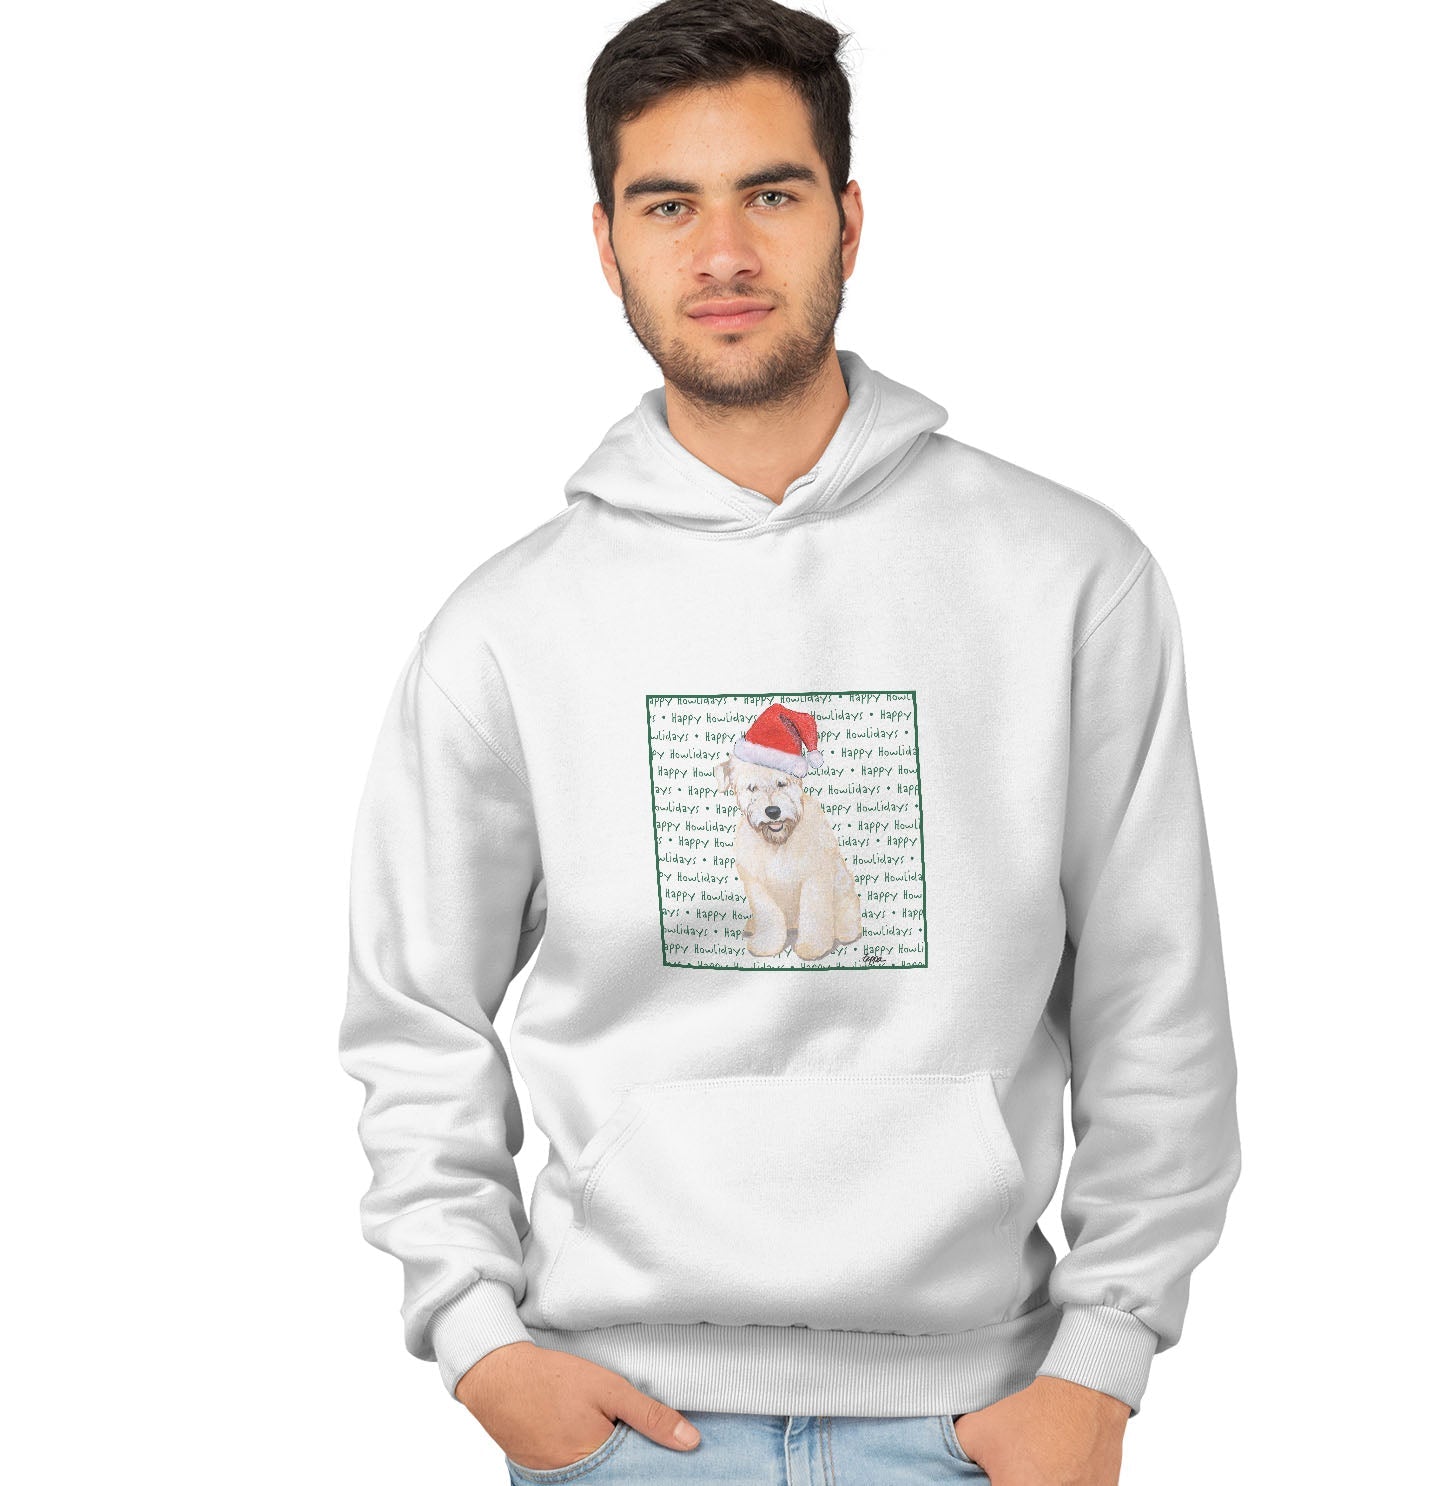 Soft Coated Wheaten Terrier Puppy Happy Howlidays Text - Adult Unisex Hoodie Sweatshirt